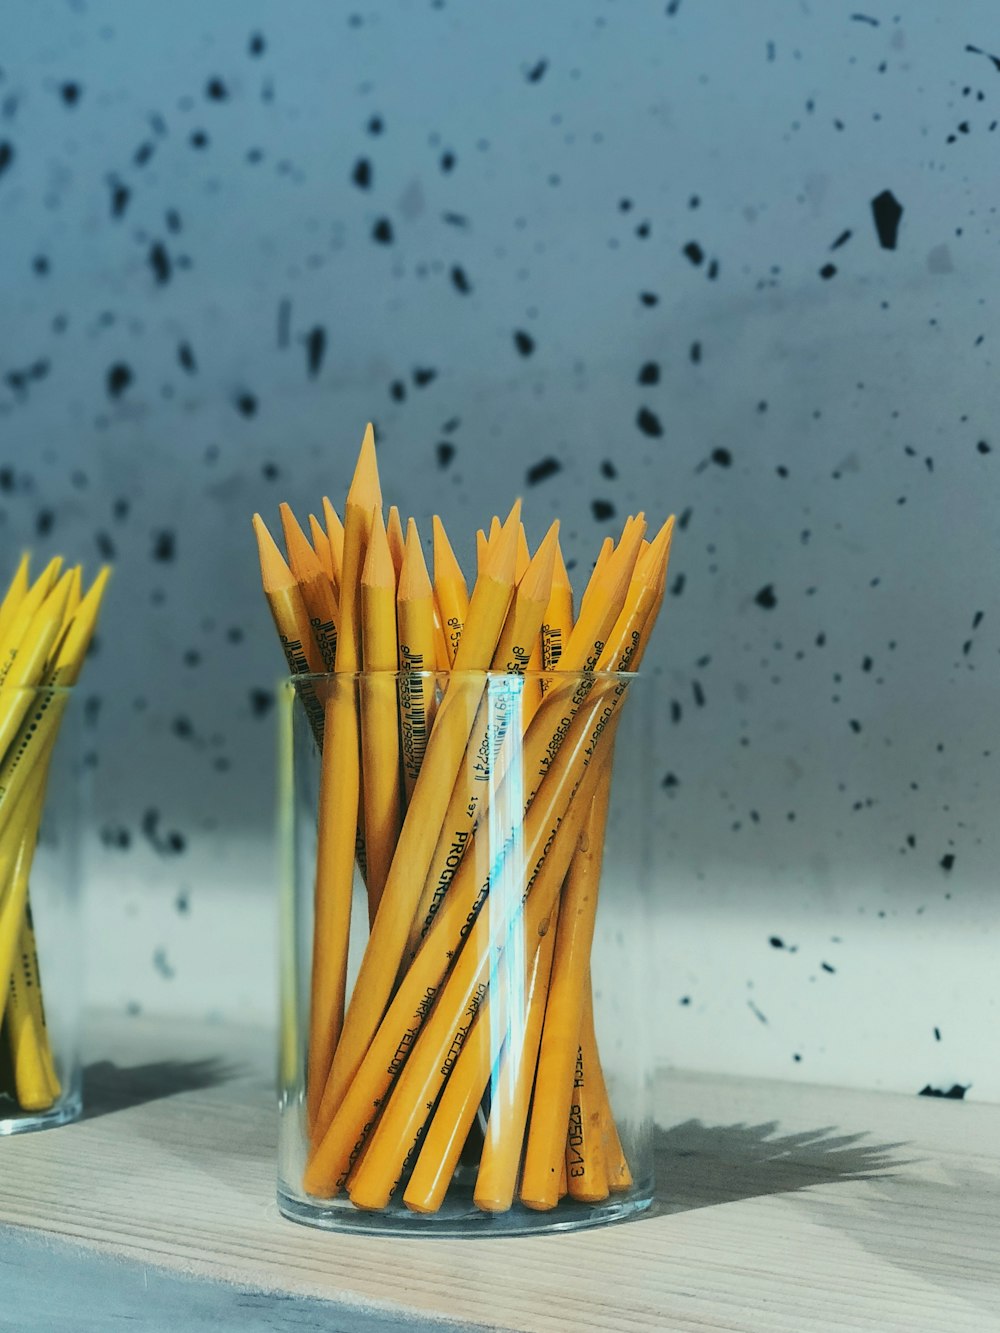 pencils in clear glass organizer